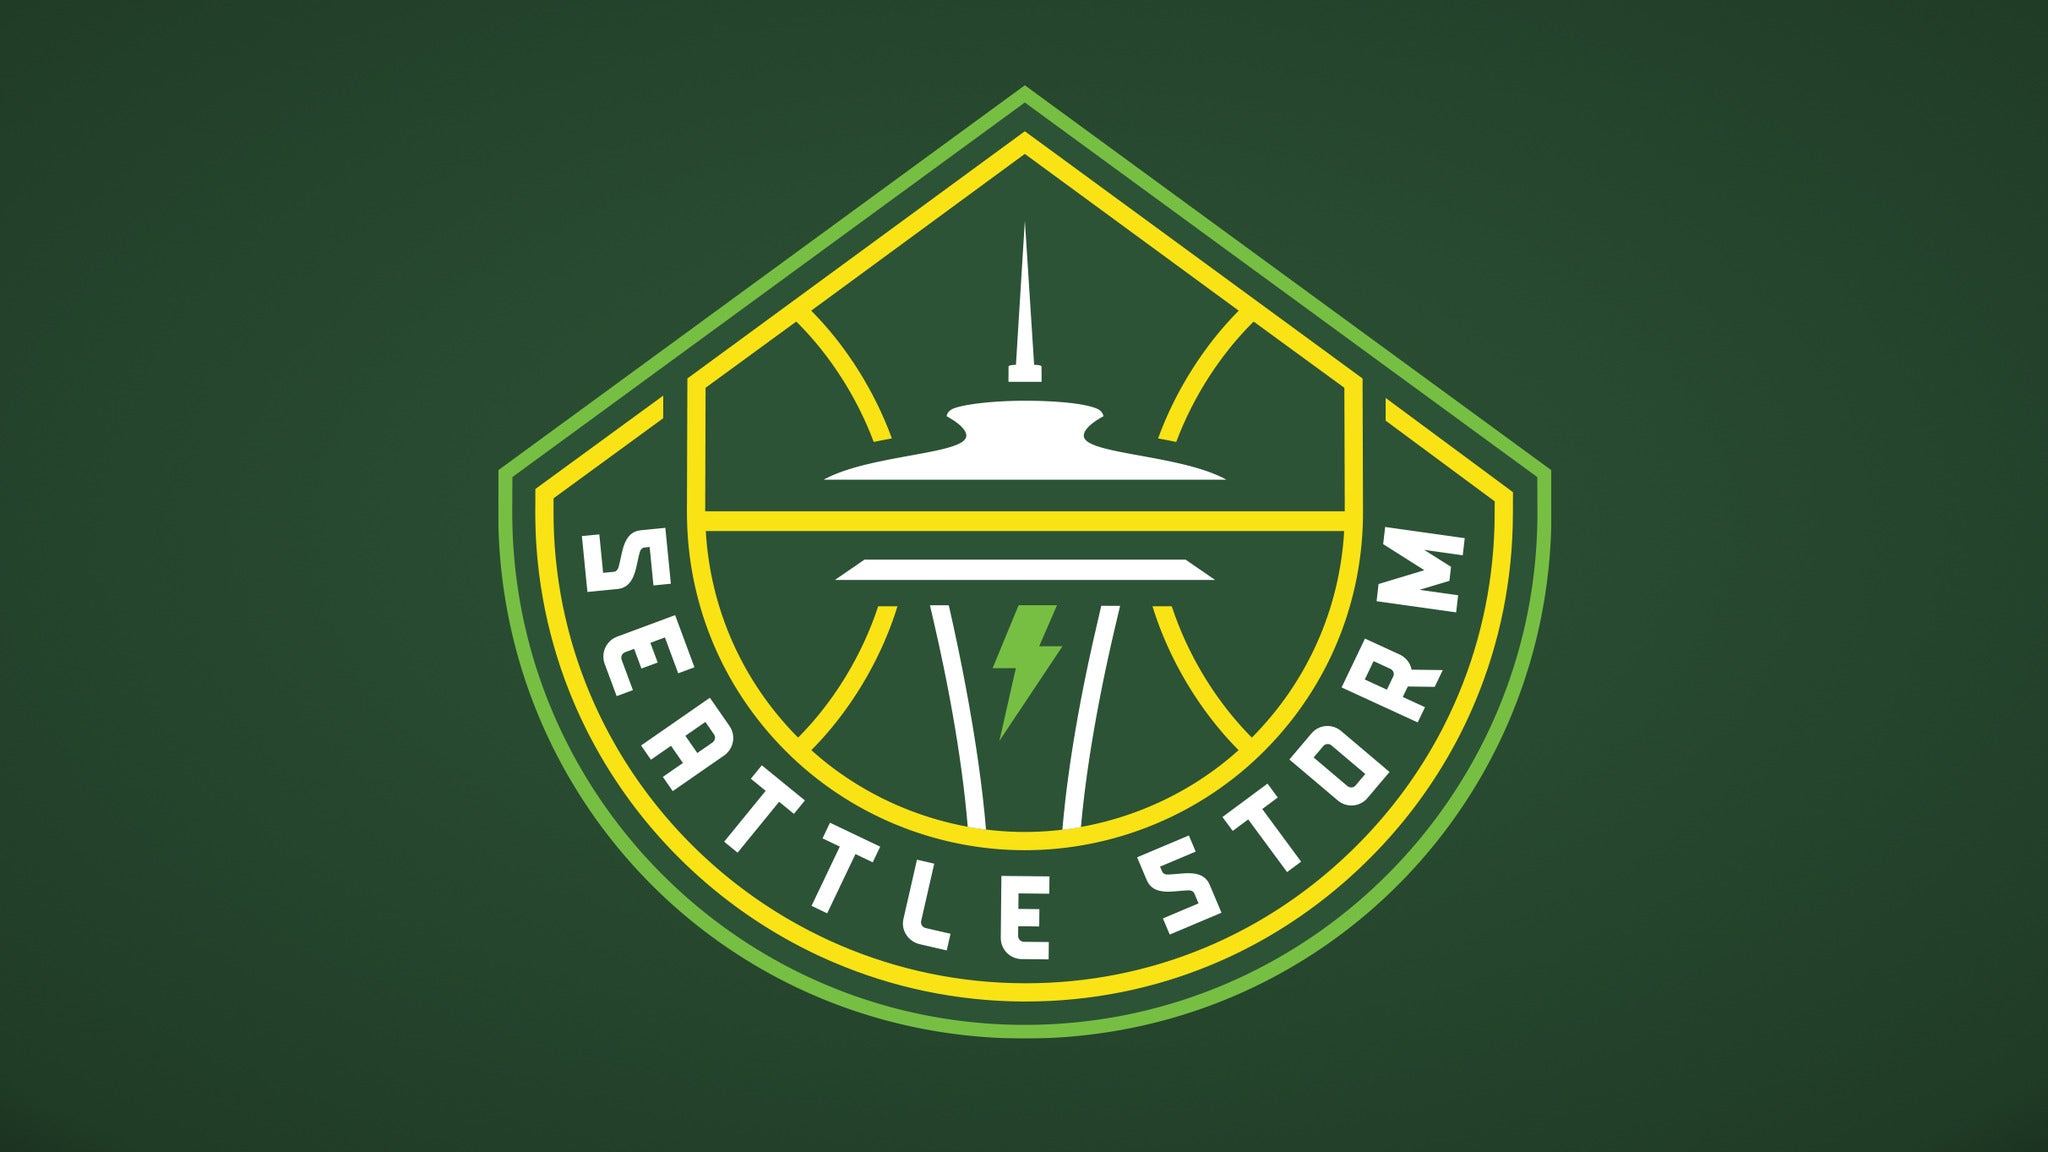 Seattle Storm vs. Las Vegas Aces in Seattle promo photo for Seattle Storm presale offer code